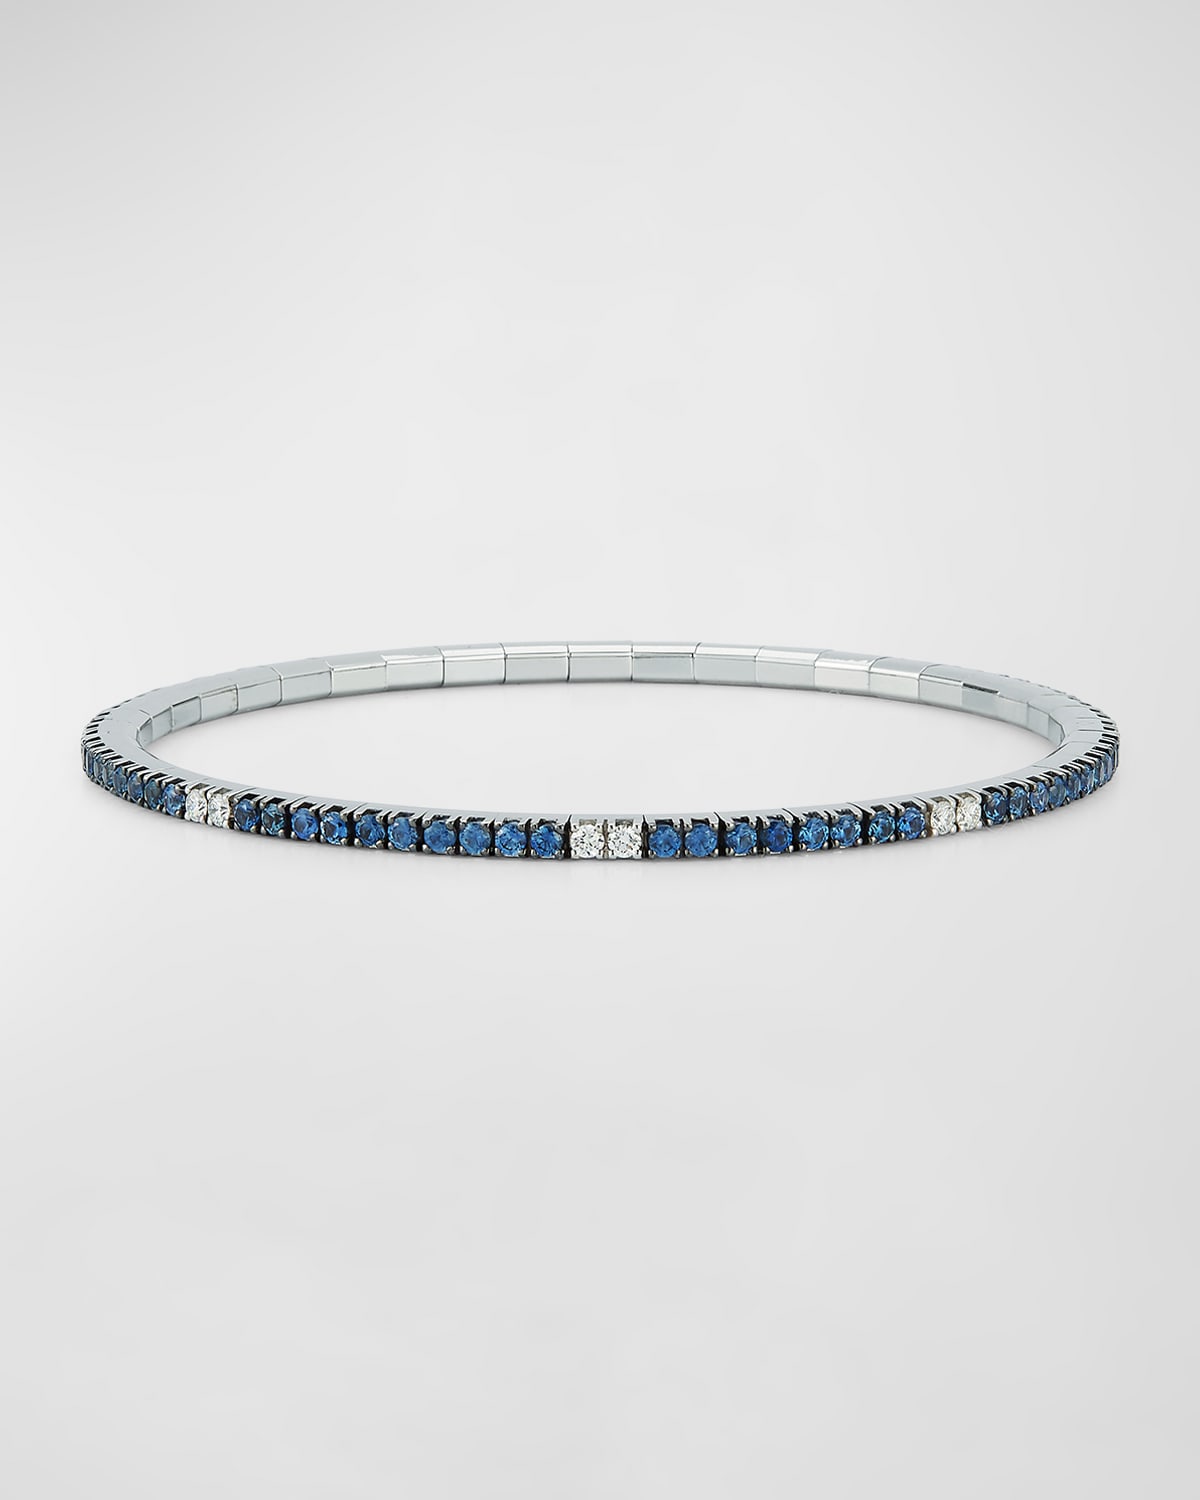 18K White Gold Blue Sapphire and Diamond Stretch Tennis Bracelet, Size 6.5"L